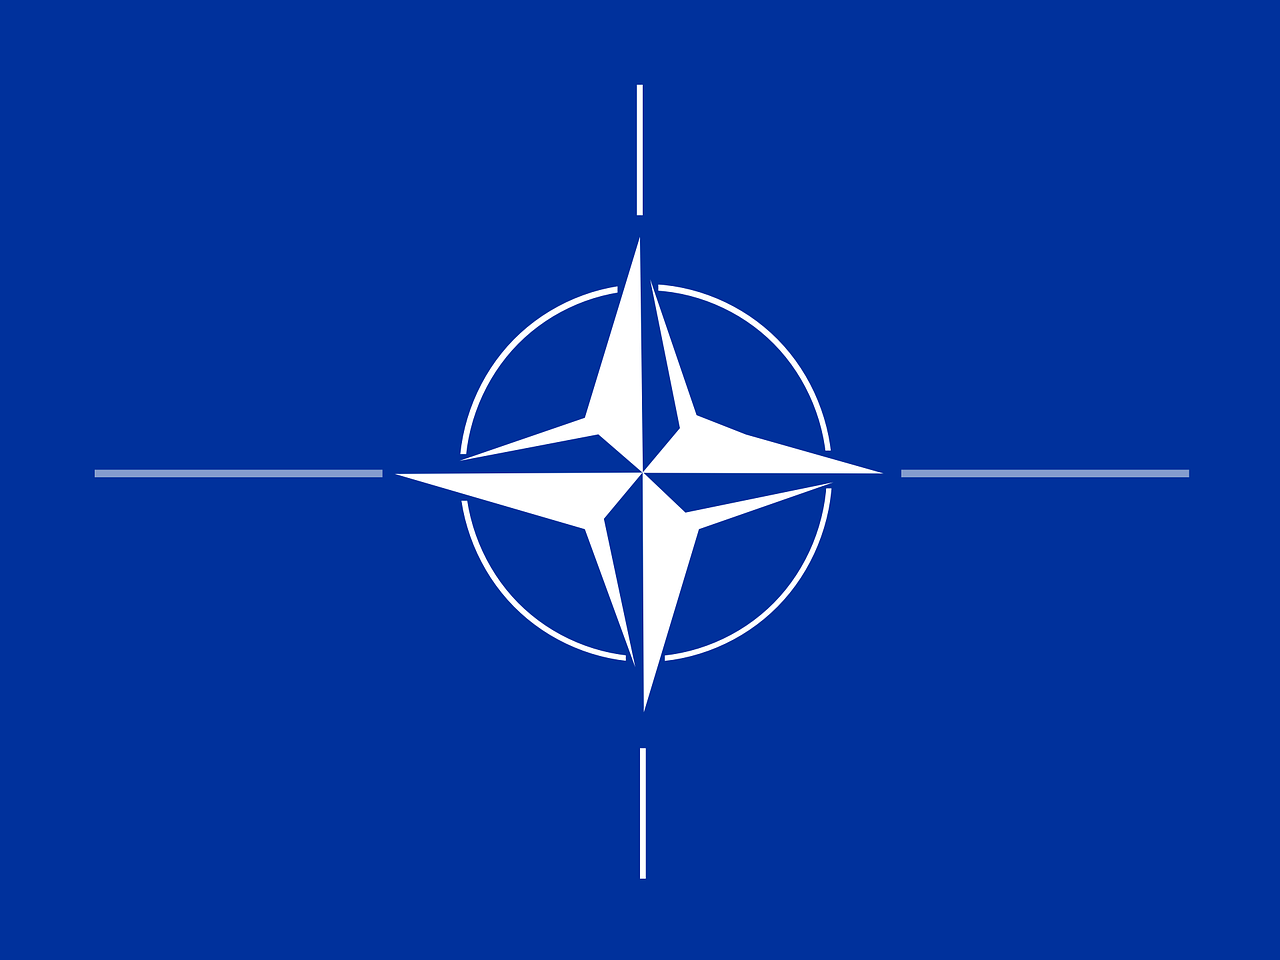 Co to jest Nato? Historia i funkcje Nato